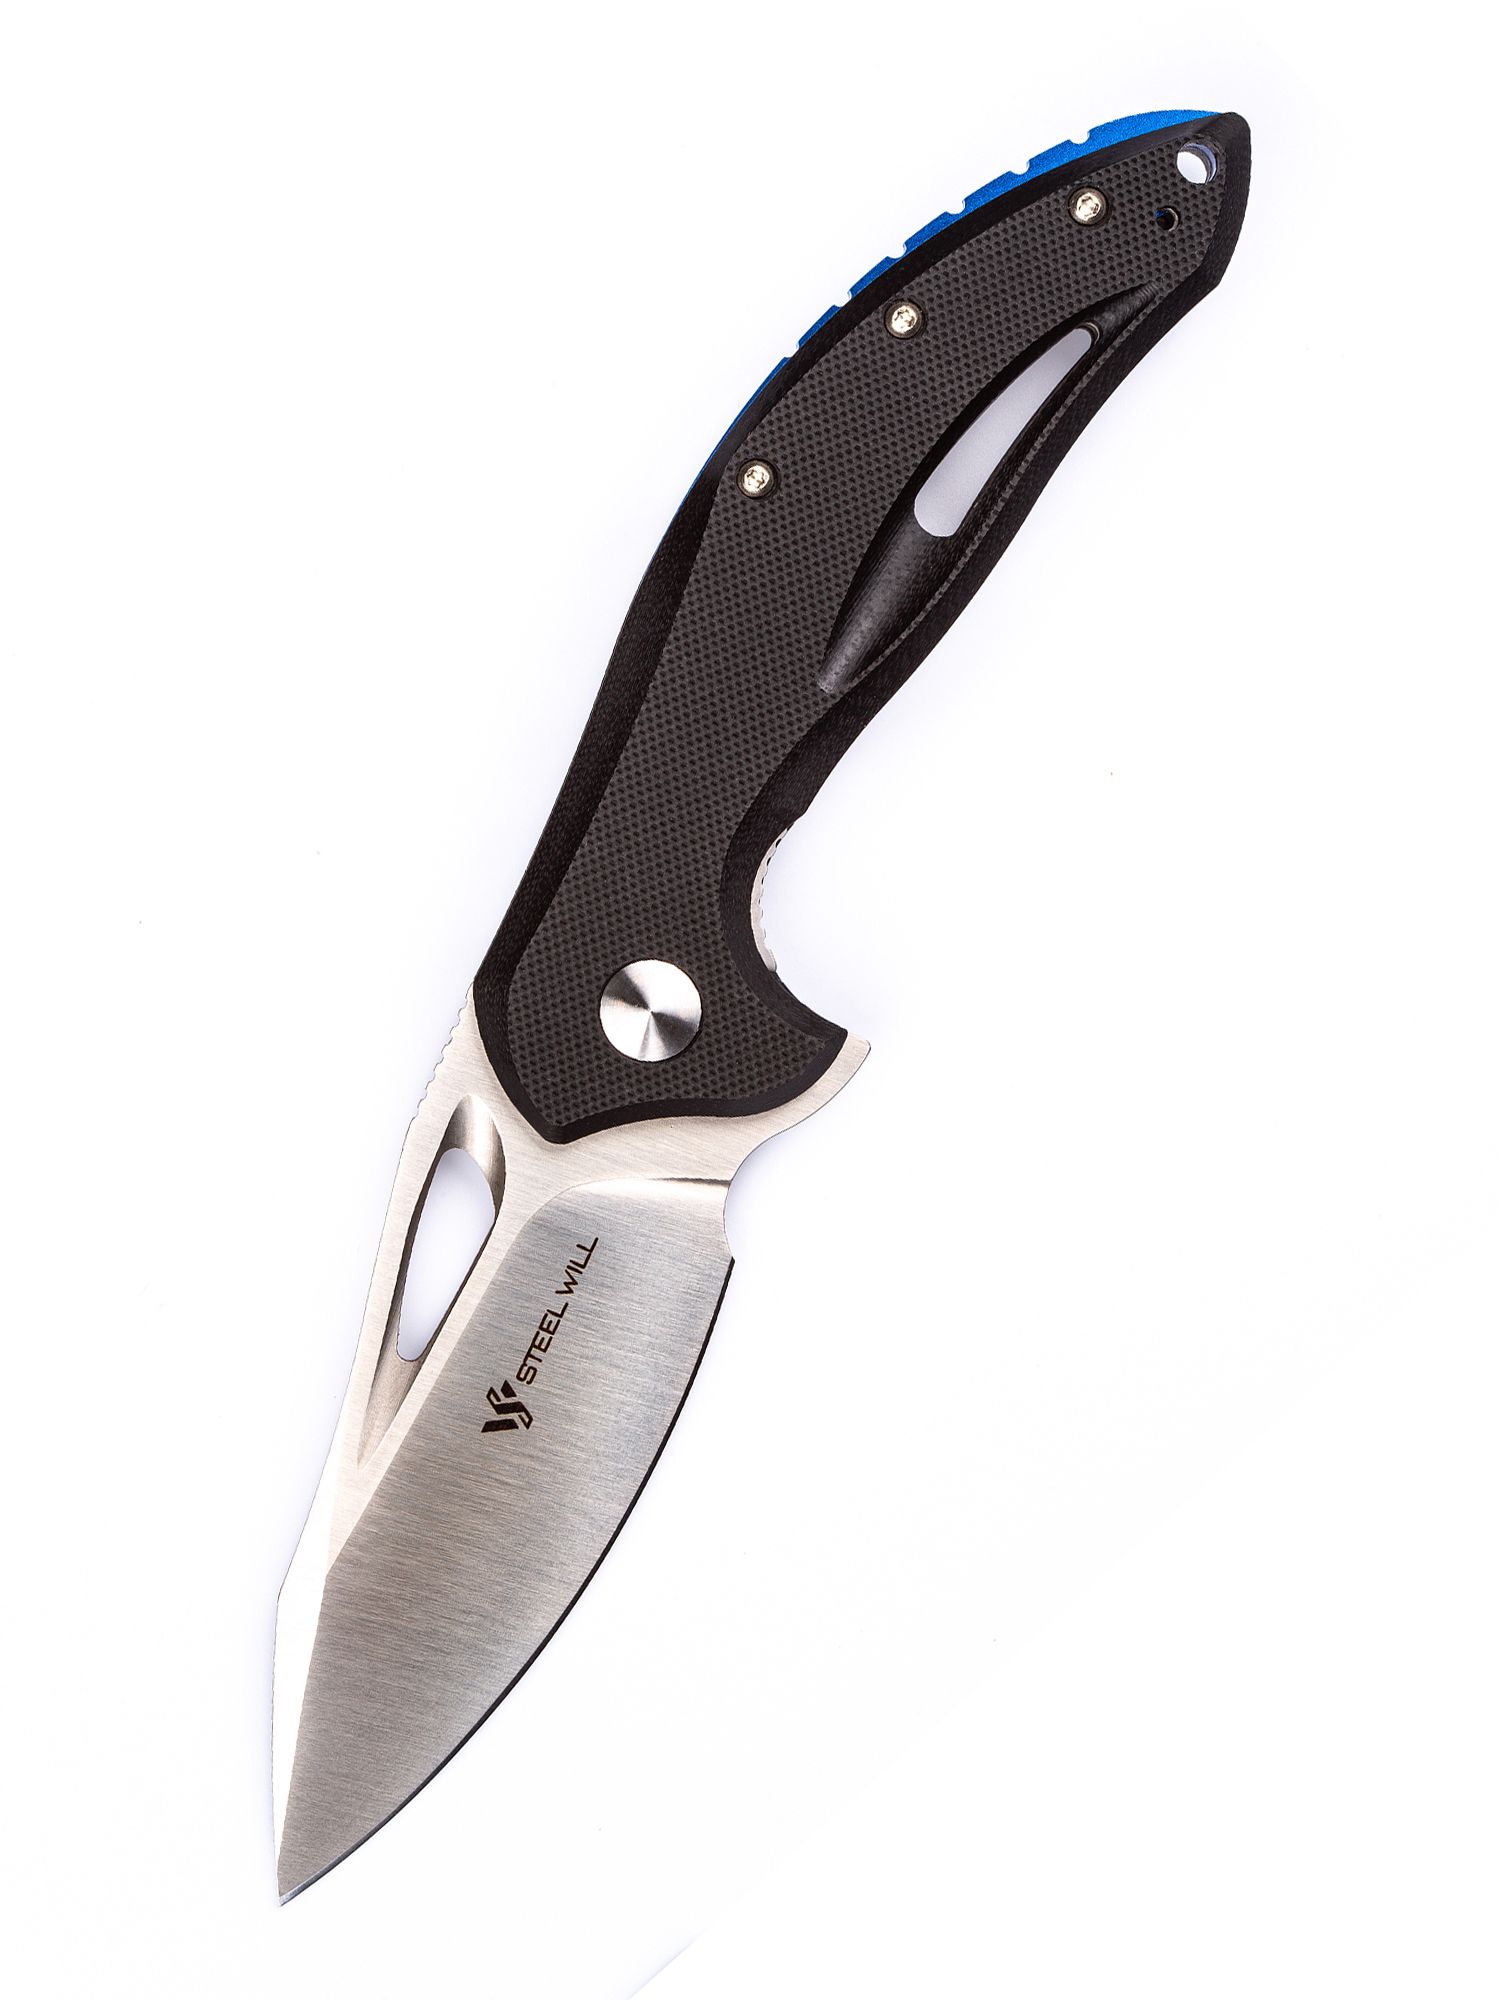 Туристический нож Steel Will F73 Screamer, black/blue